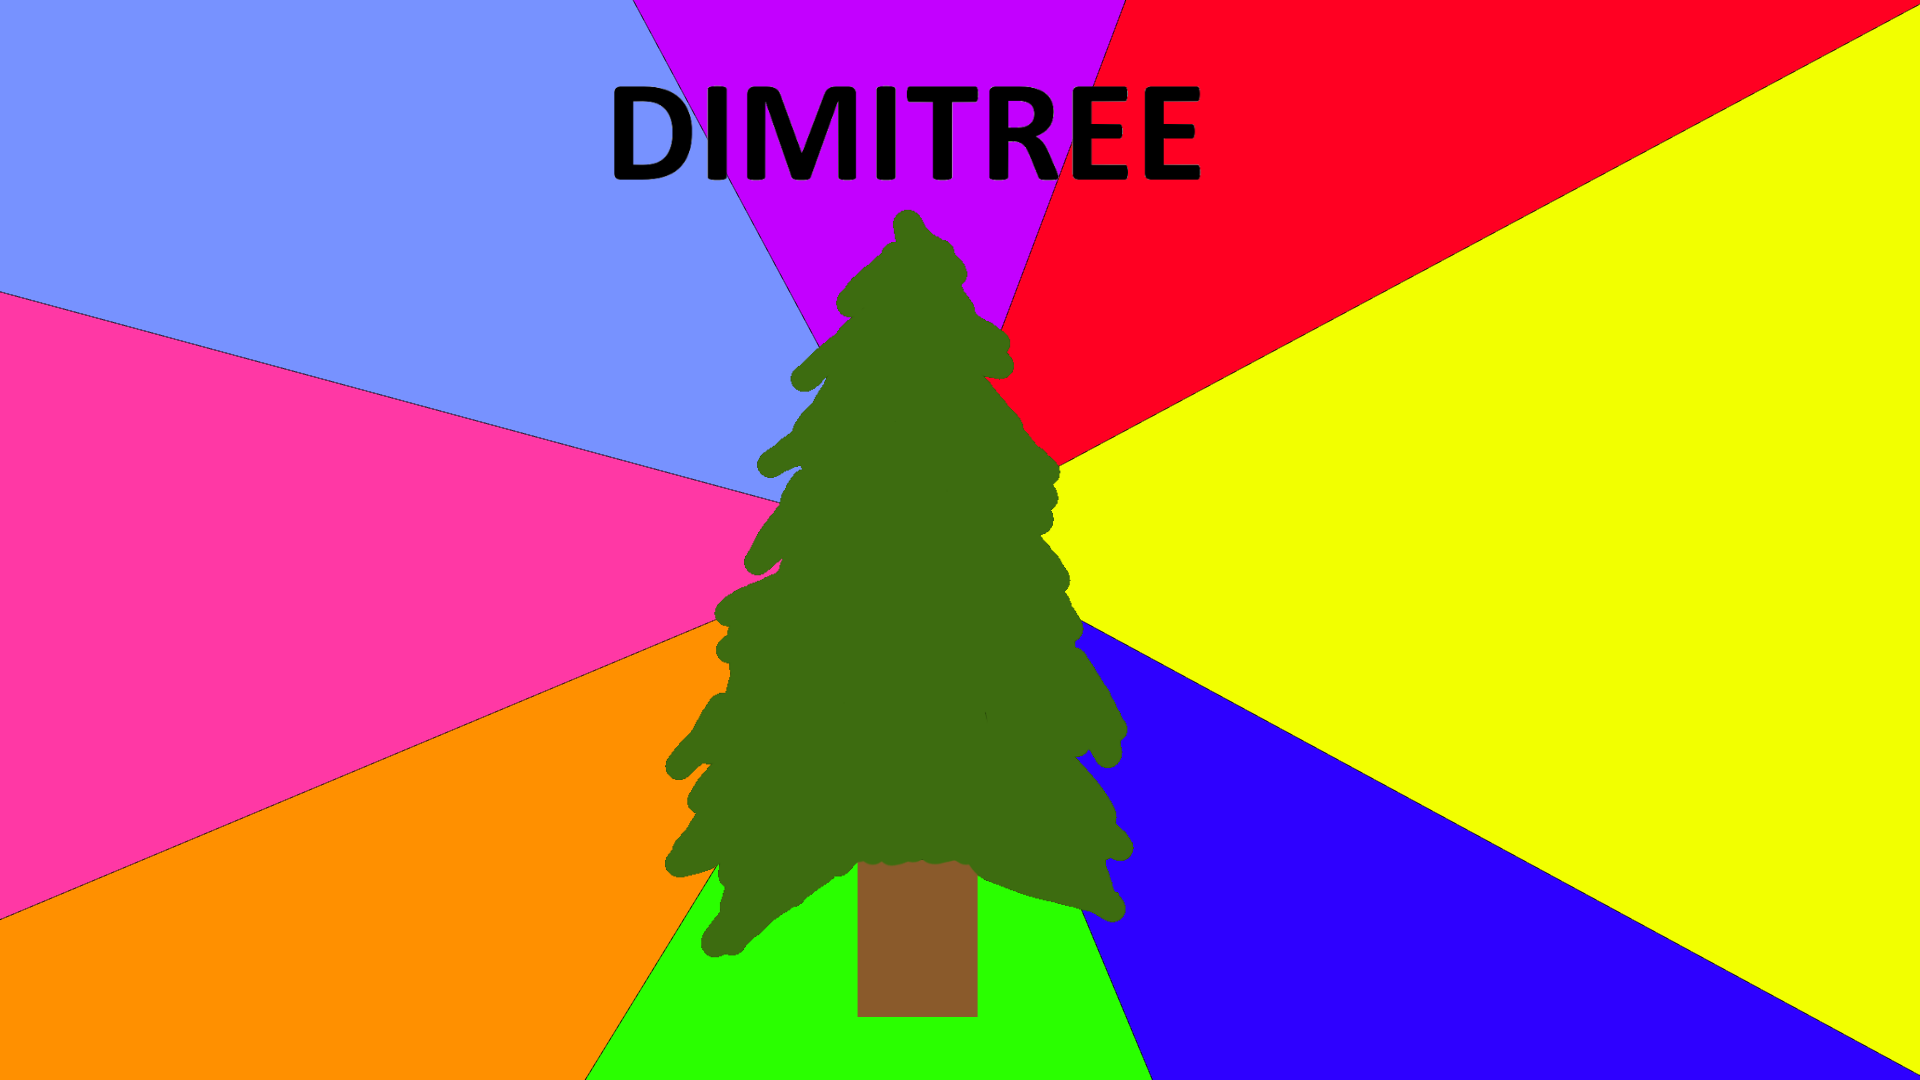 Dimitree